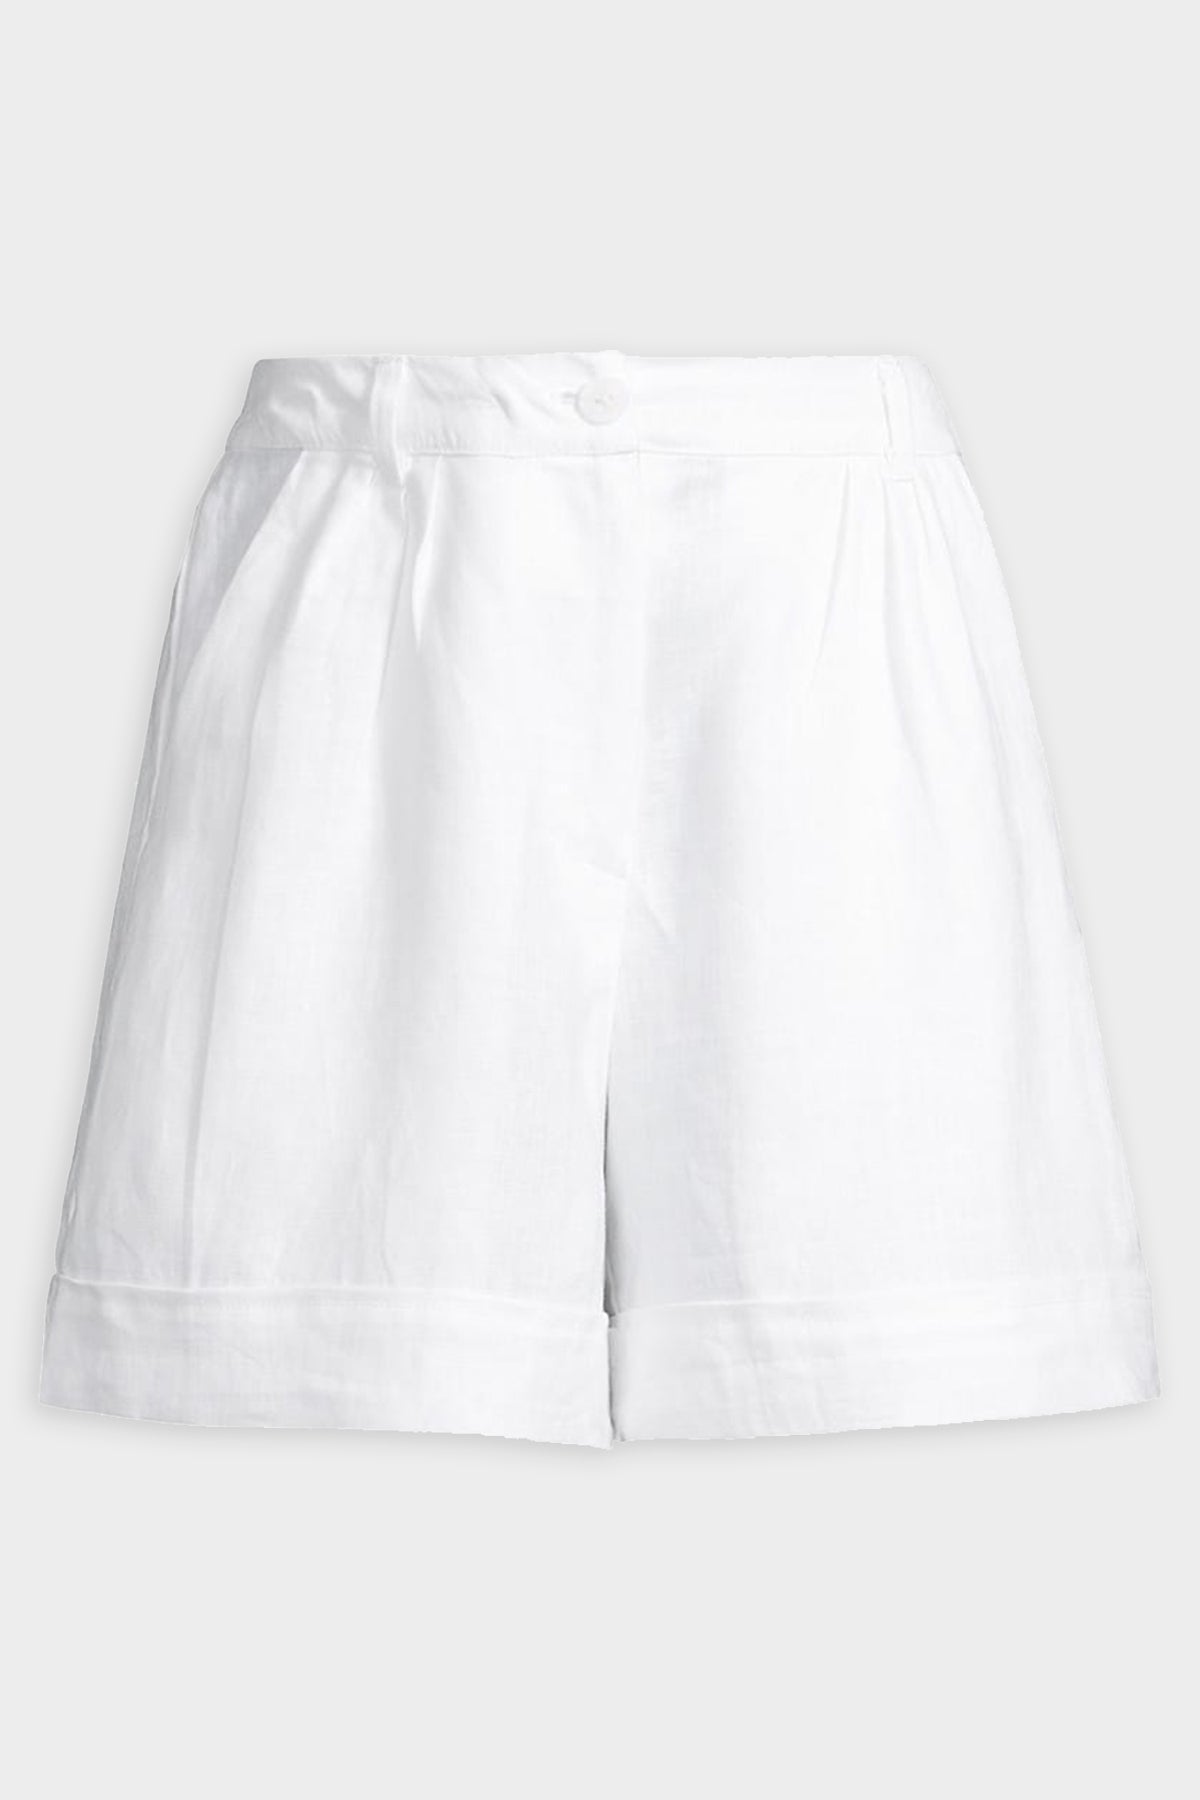 Les Deux Short in White - shop-olivia.com